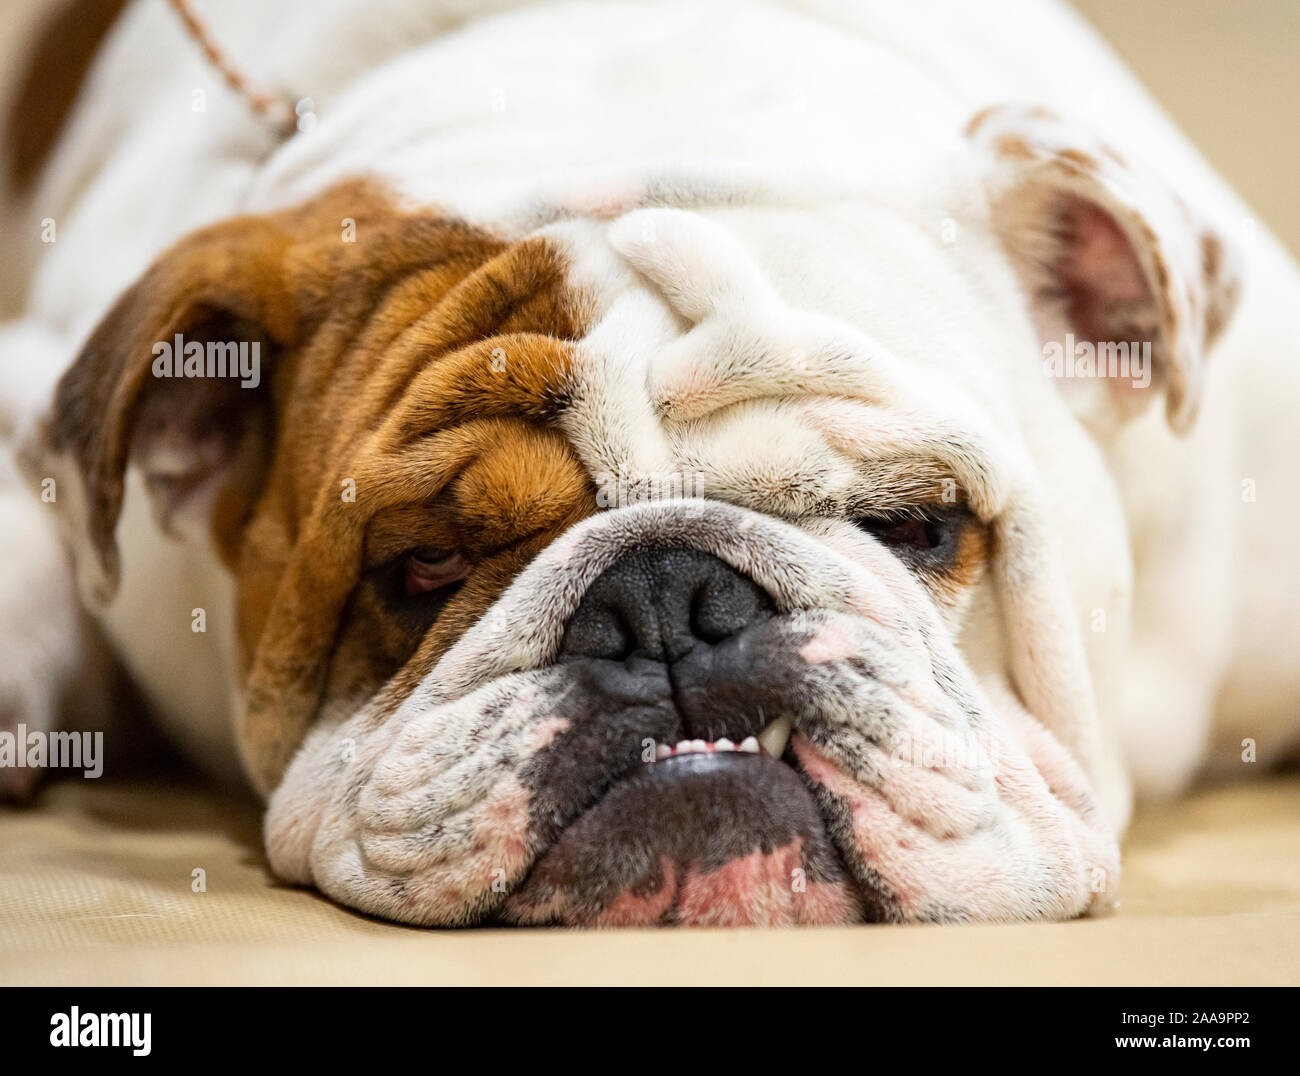 English Bulldog close up of his face while lying down Stock Photo